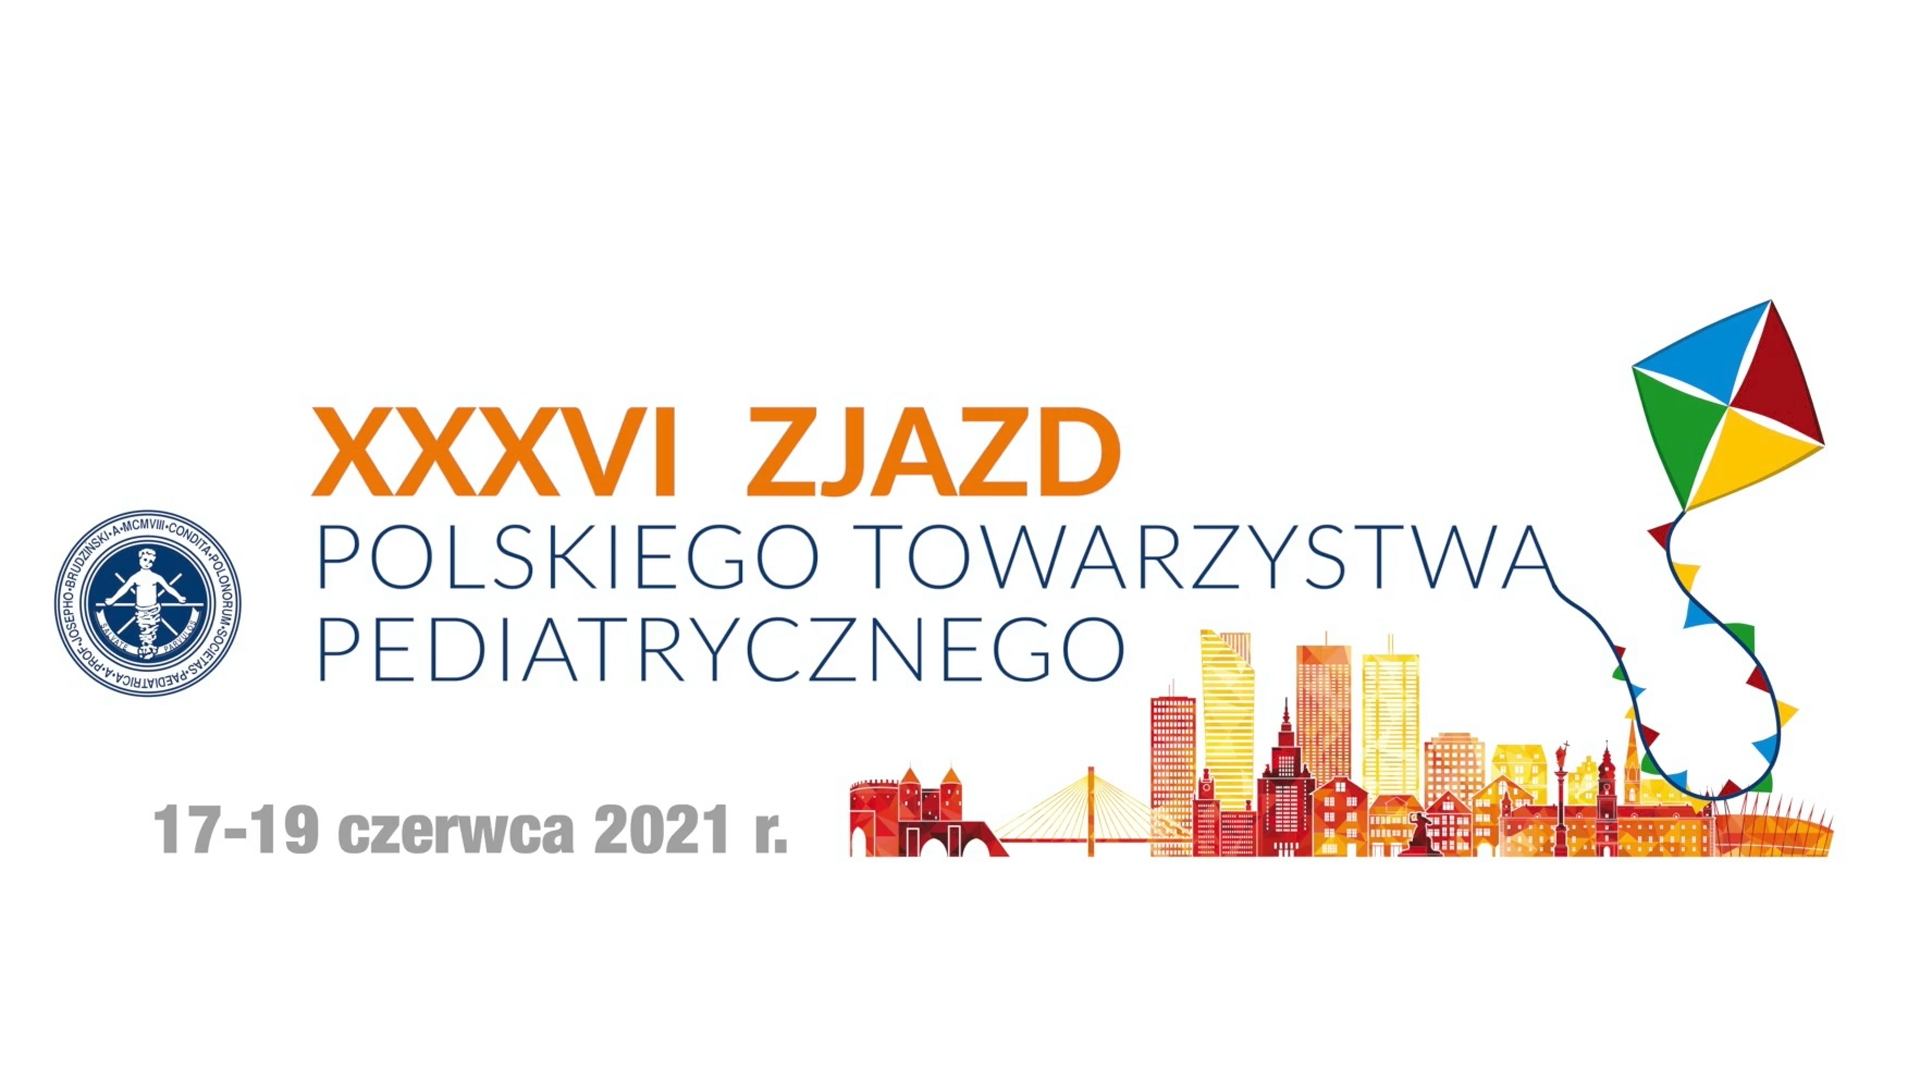 PSNC as a technological partner of the XXXVI Congress of the Polish Pediatric Society